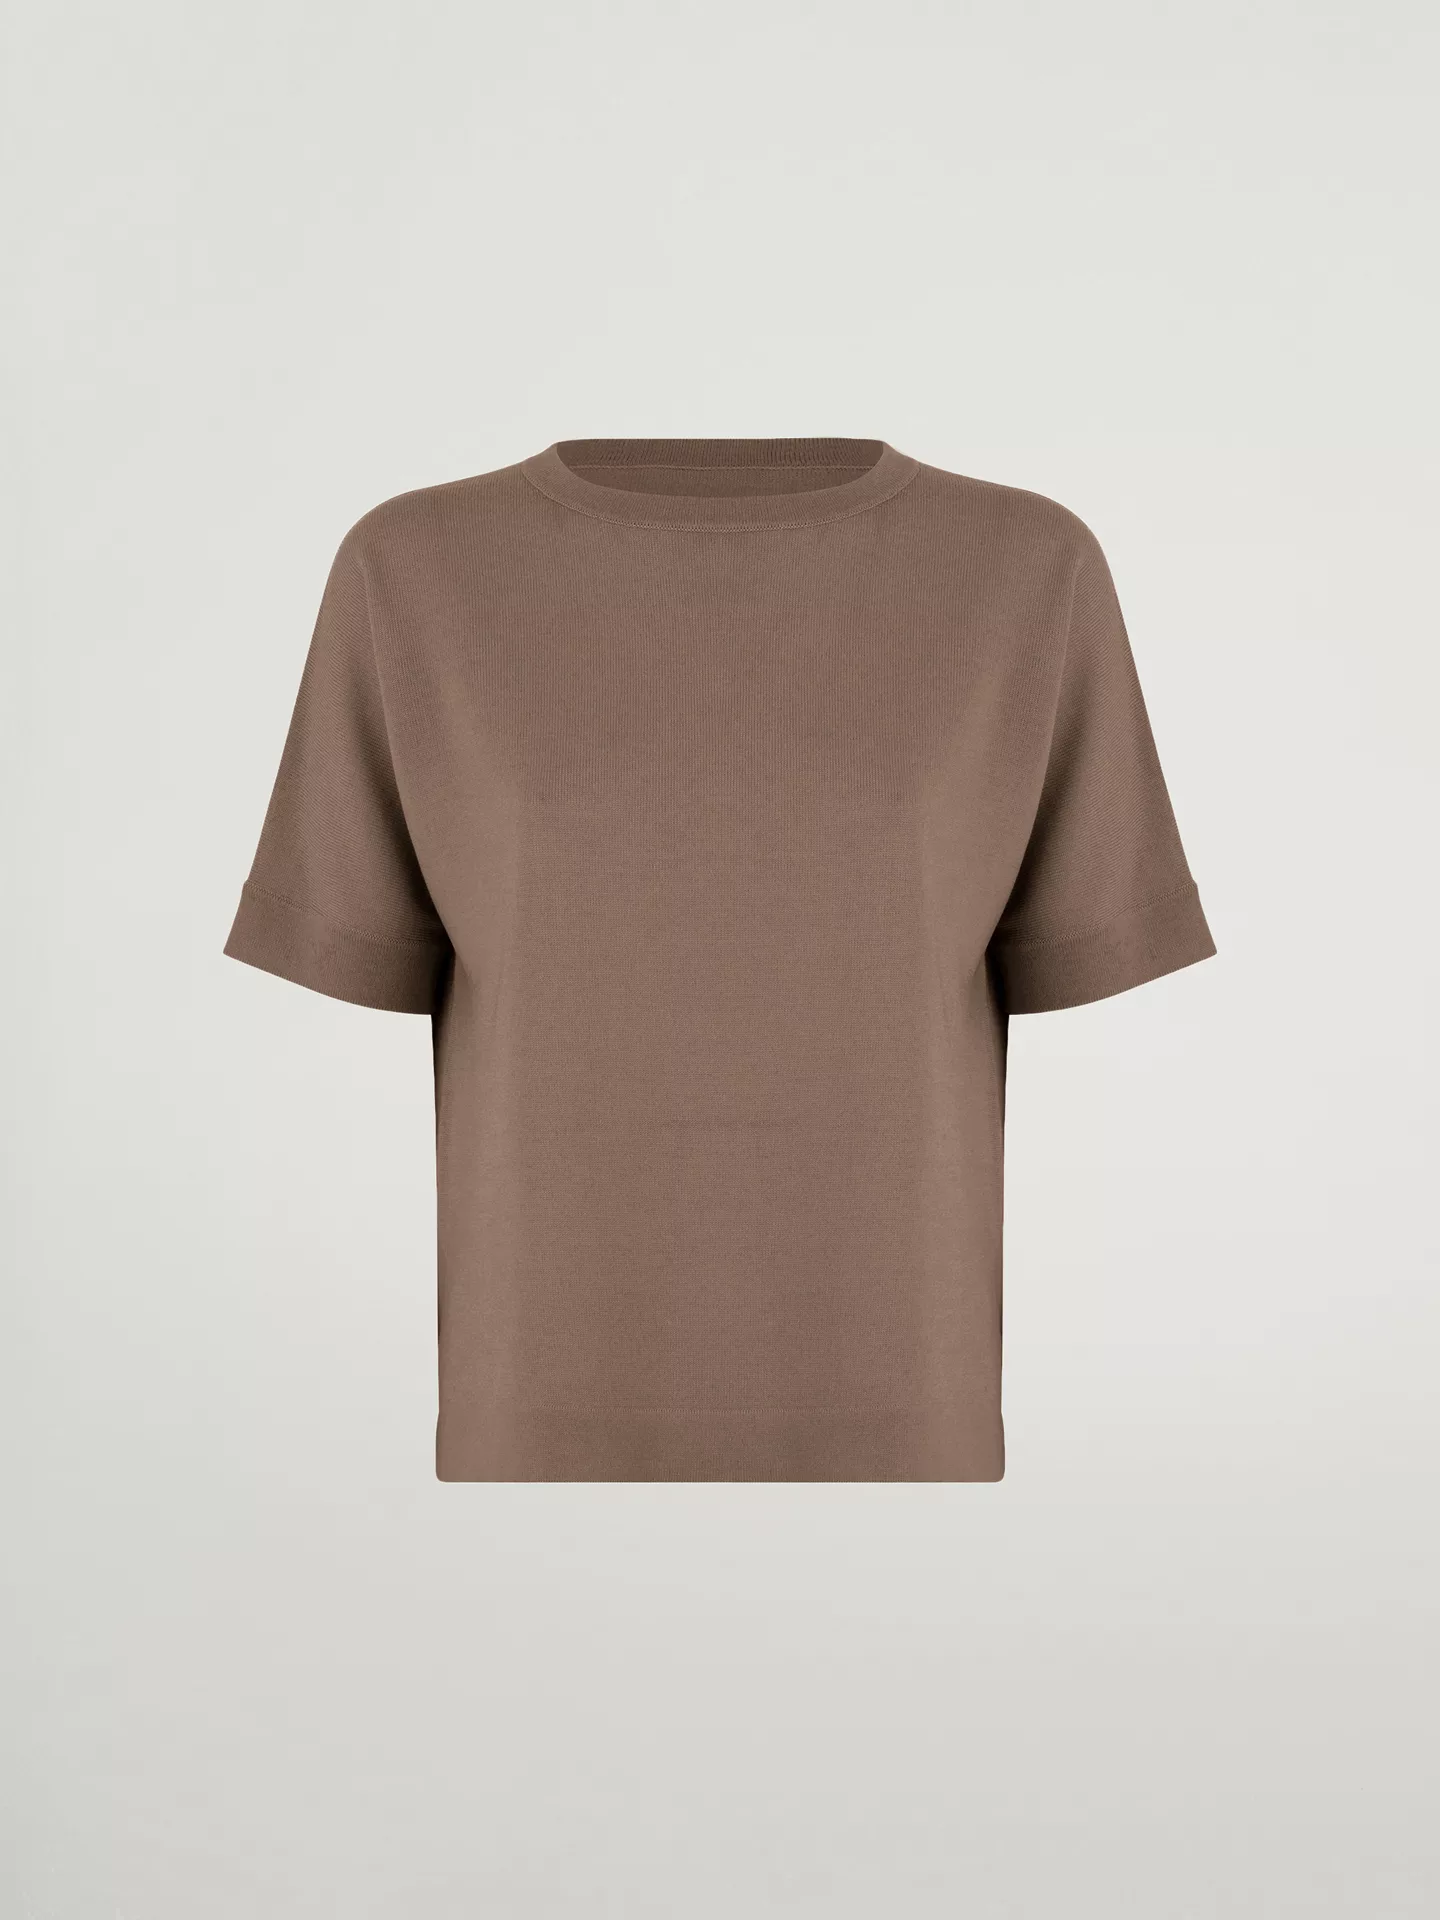 Wolford - Merino Blend Top Short Sleeves, Frau, beige mele, Größe: XS günstig online kaufen